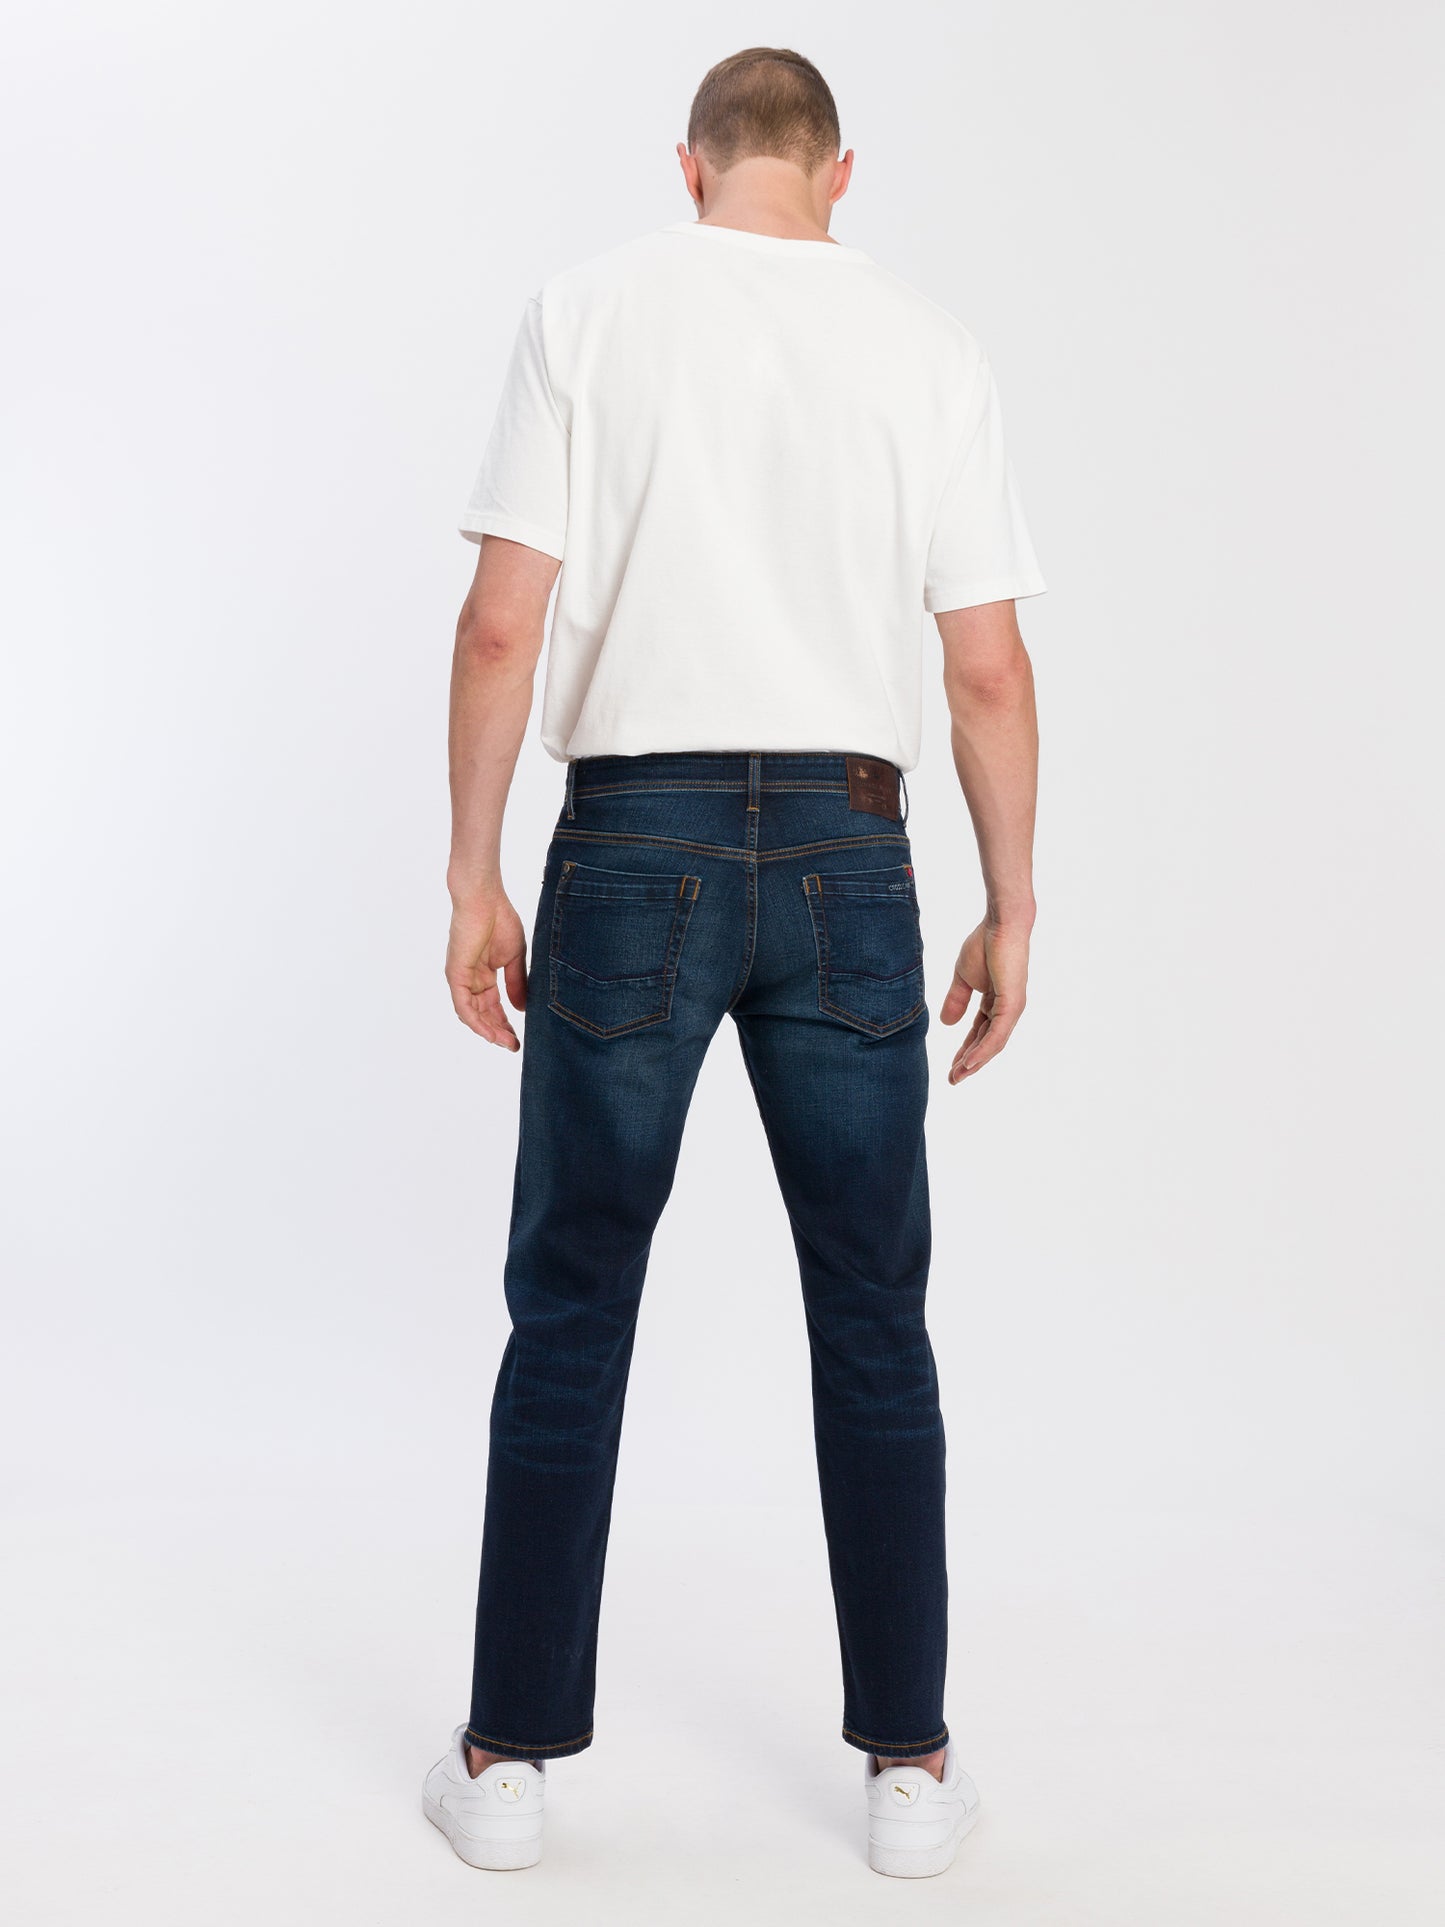 Antonio men's jeans relaxed fit regular waist straight leg blue